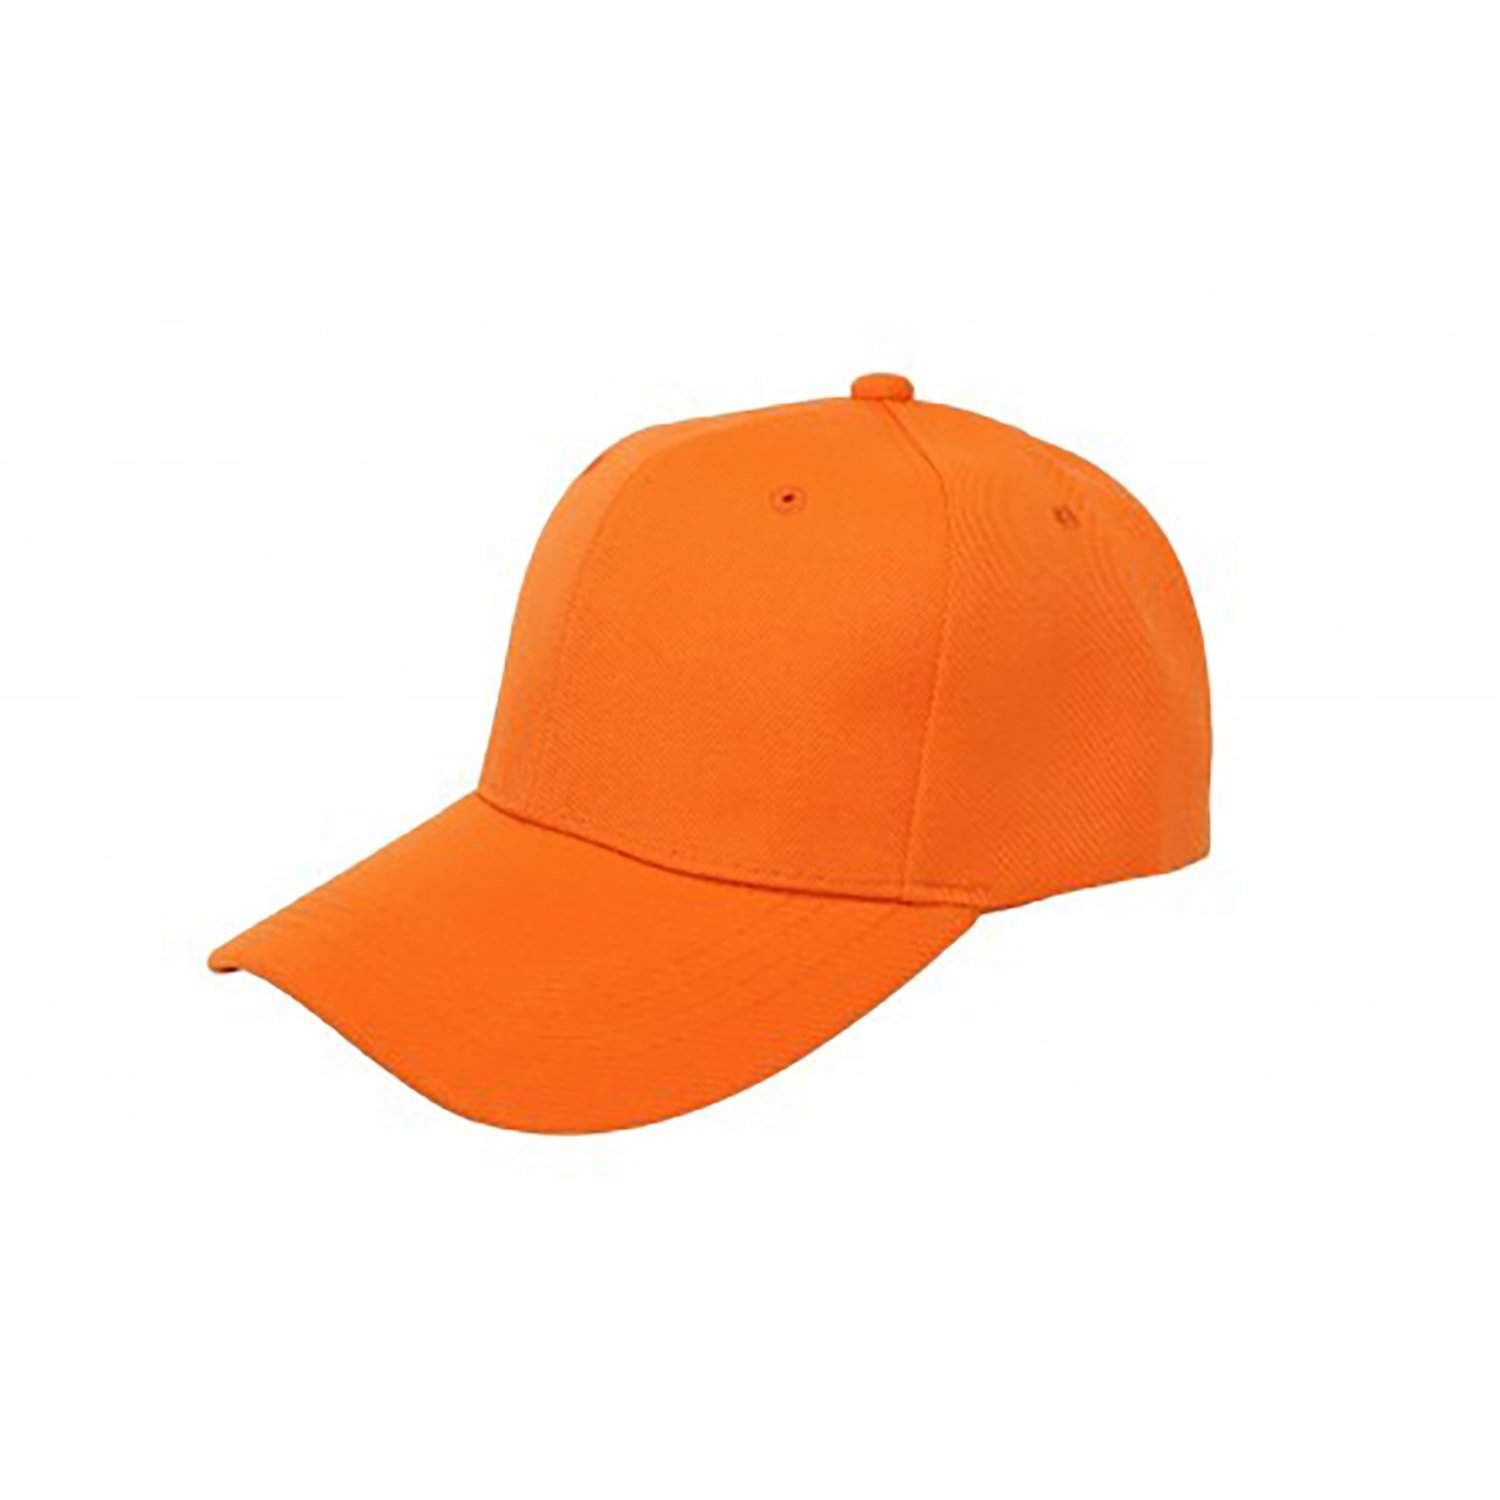 Balec Plain Baseball Cap Hat Adjustable Back